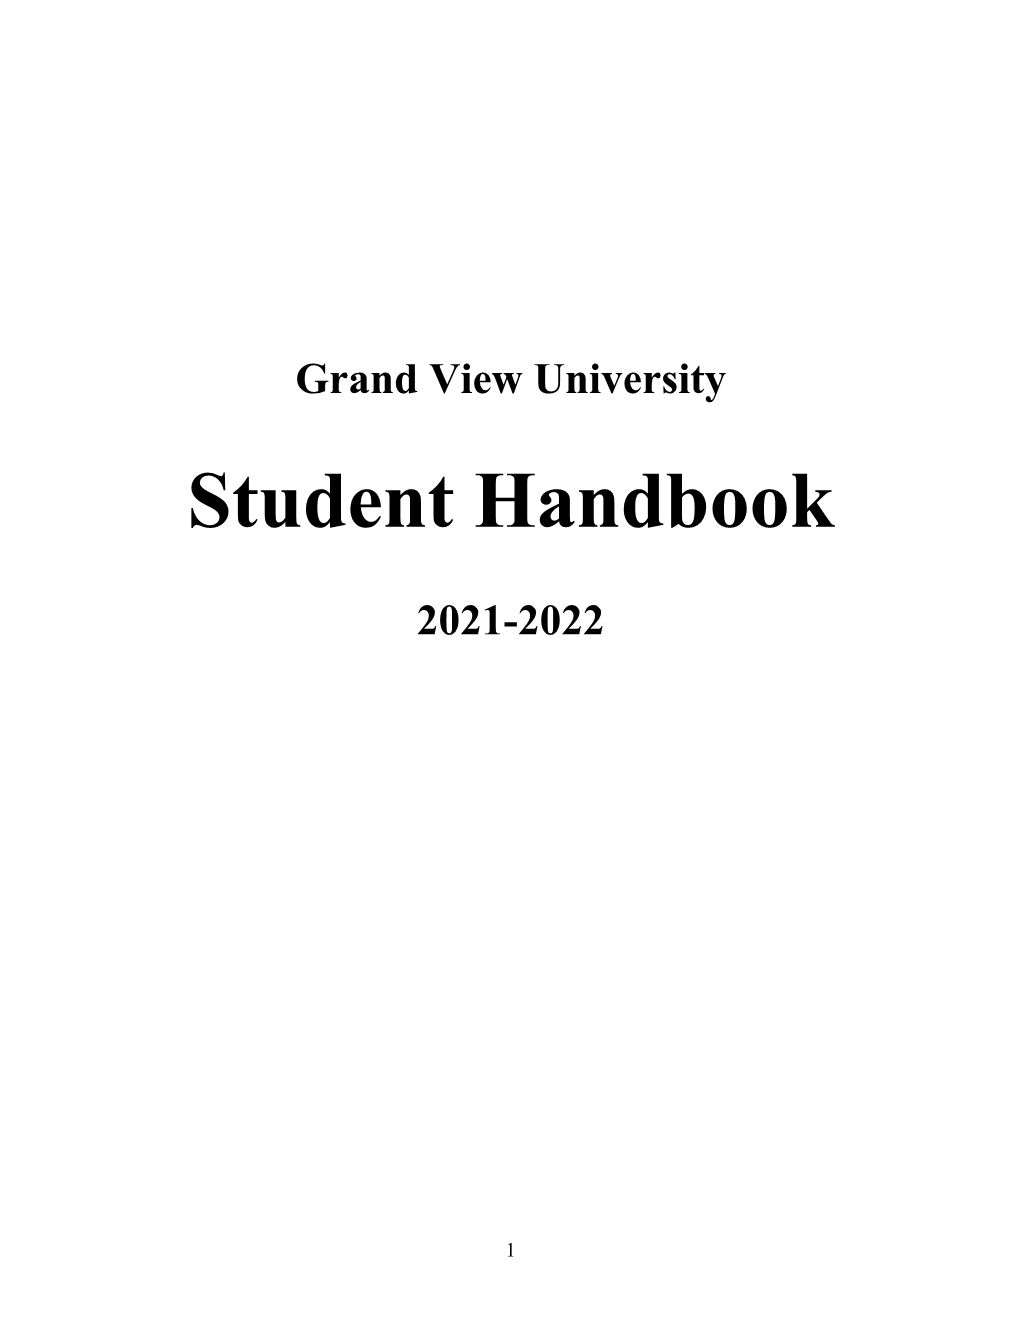 2012-2013 Student Handbook Revised 2012 07 12